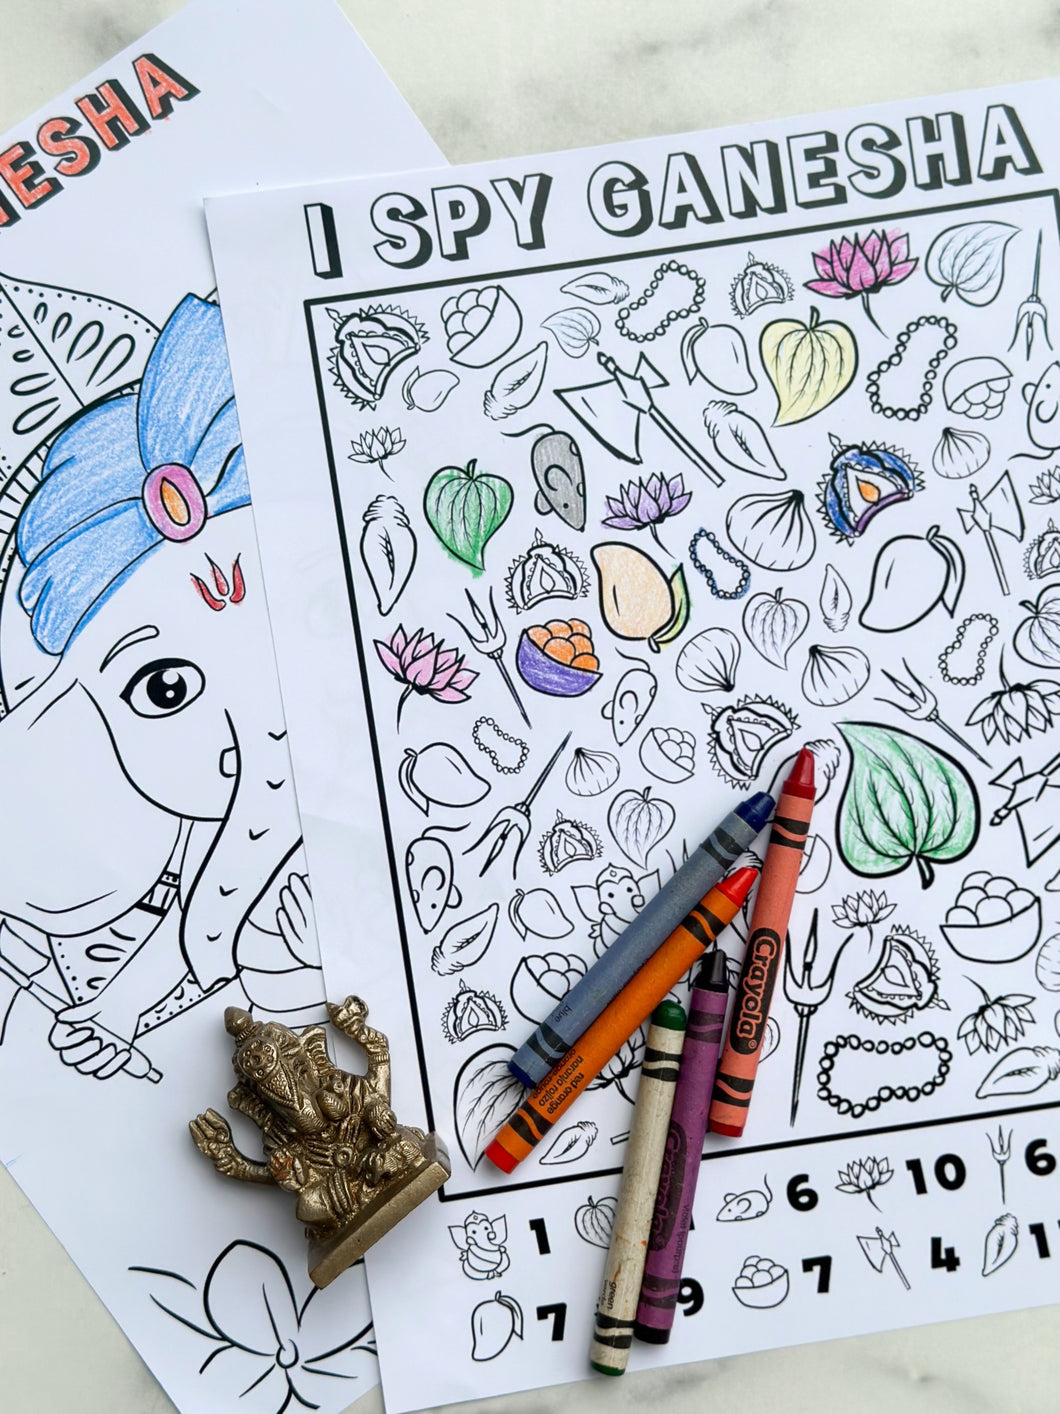 Ganesha I Spy Game - FREE Printable